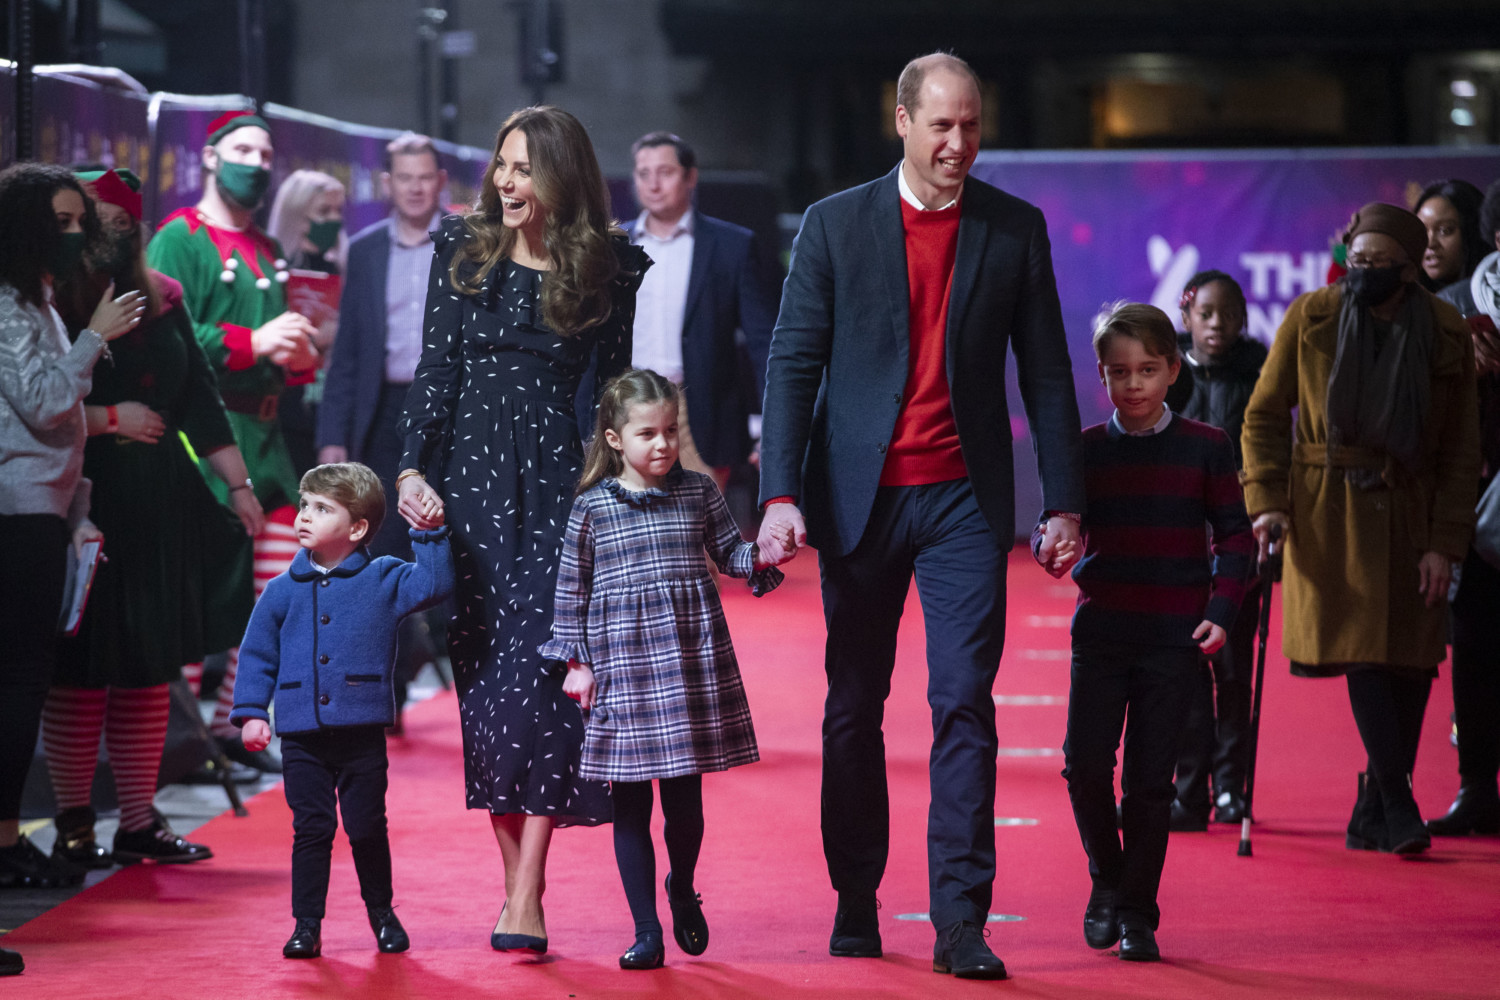 Prince William, Kate Middleton walk red carpet with their three children